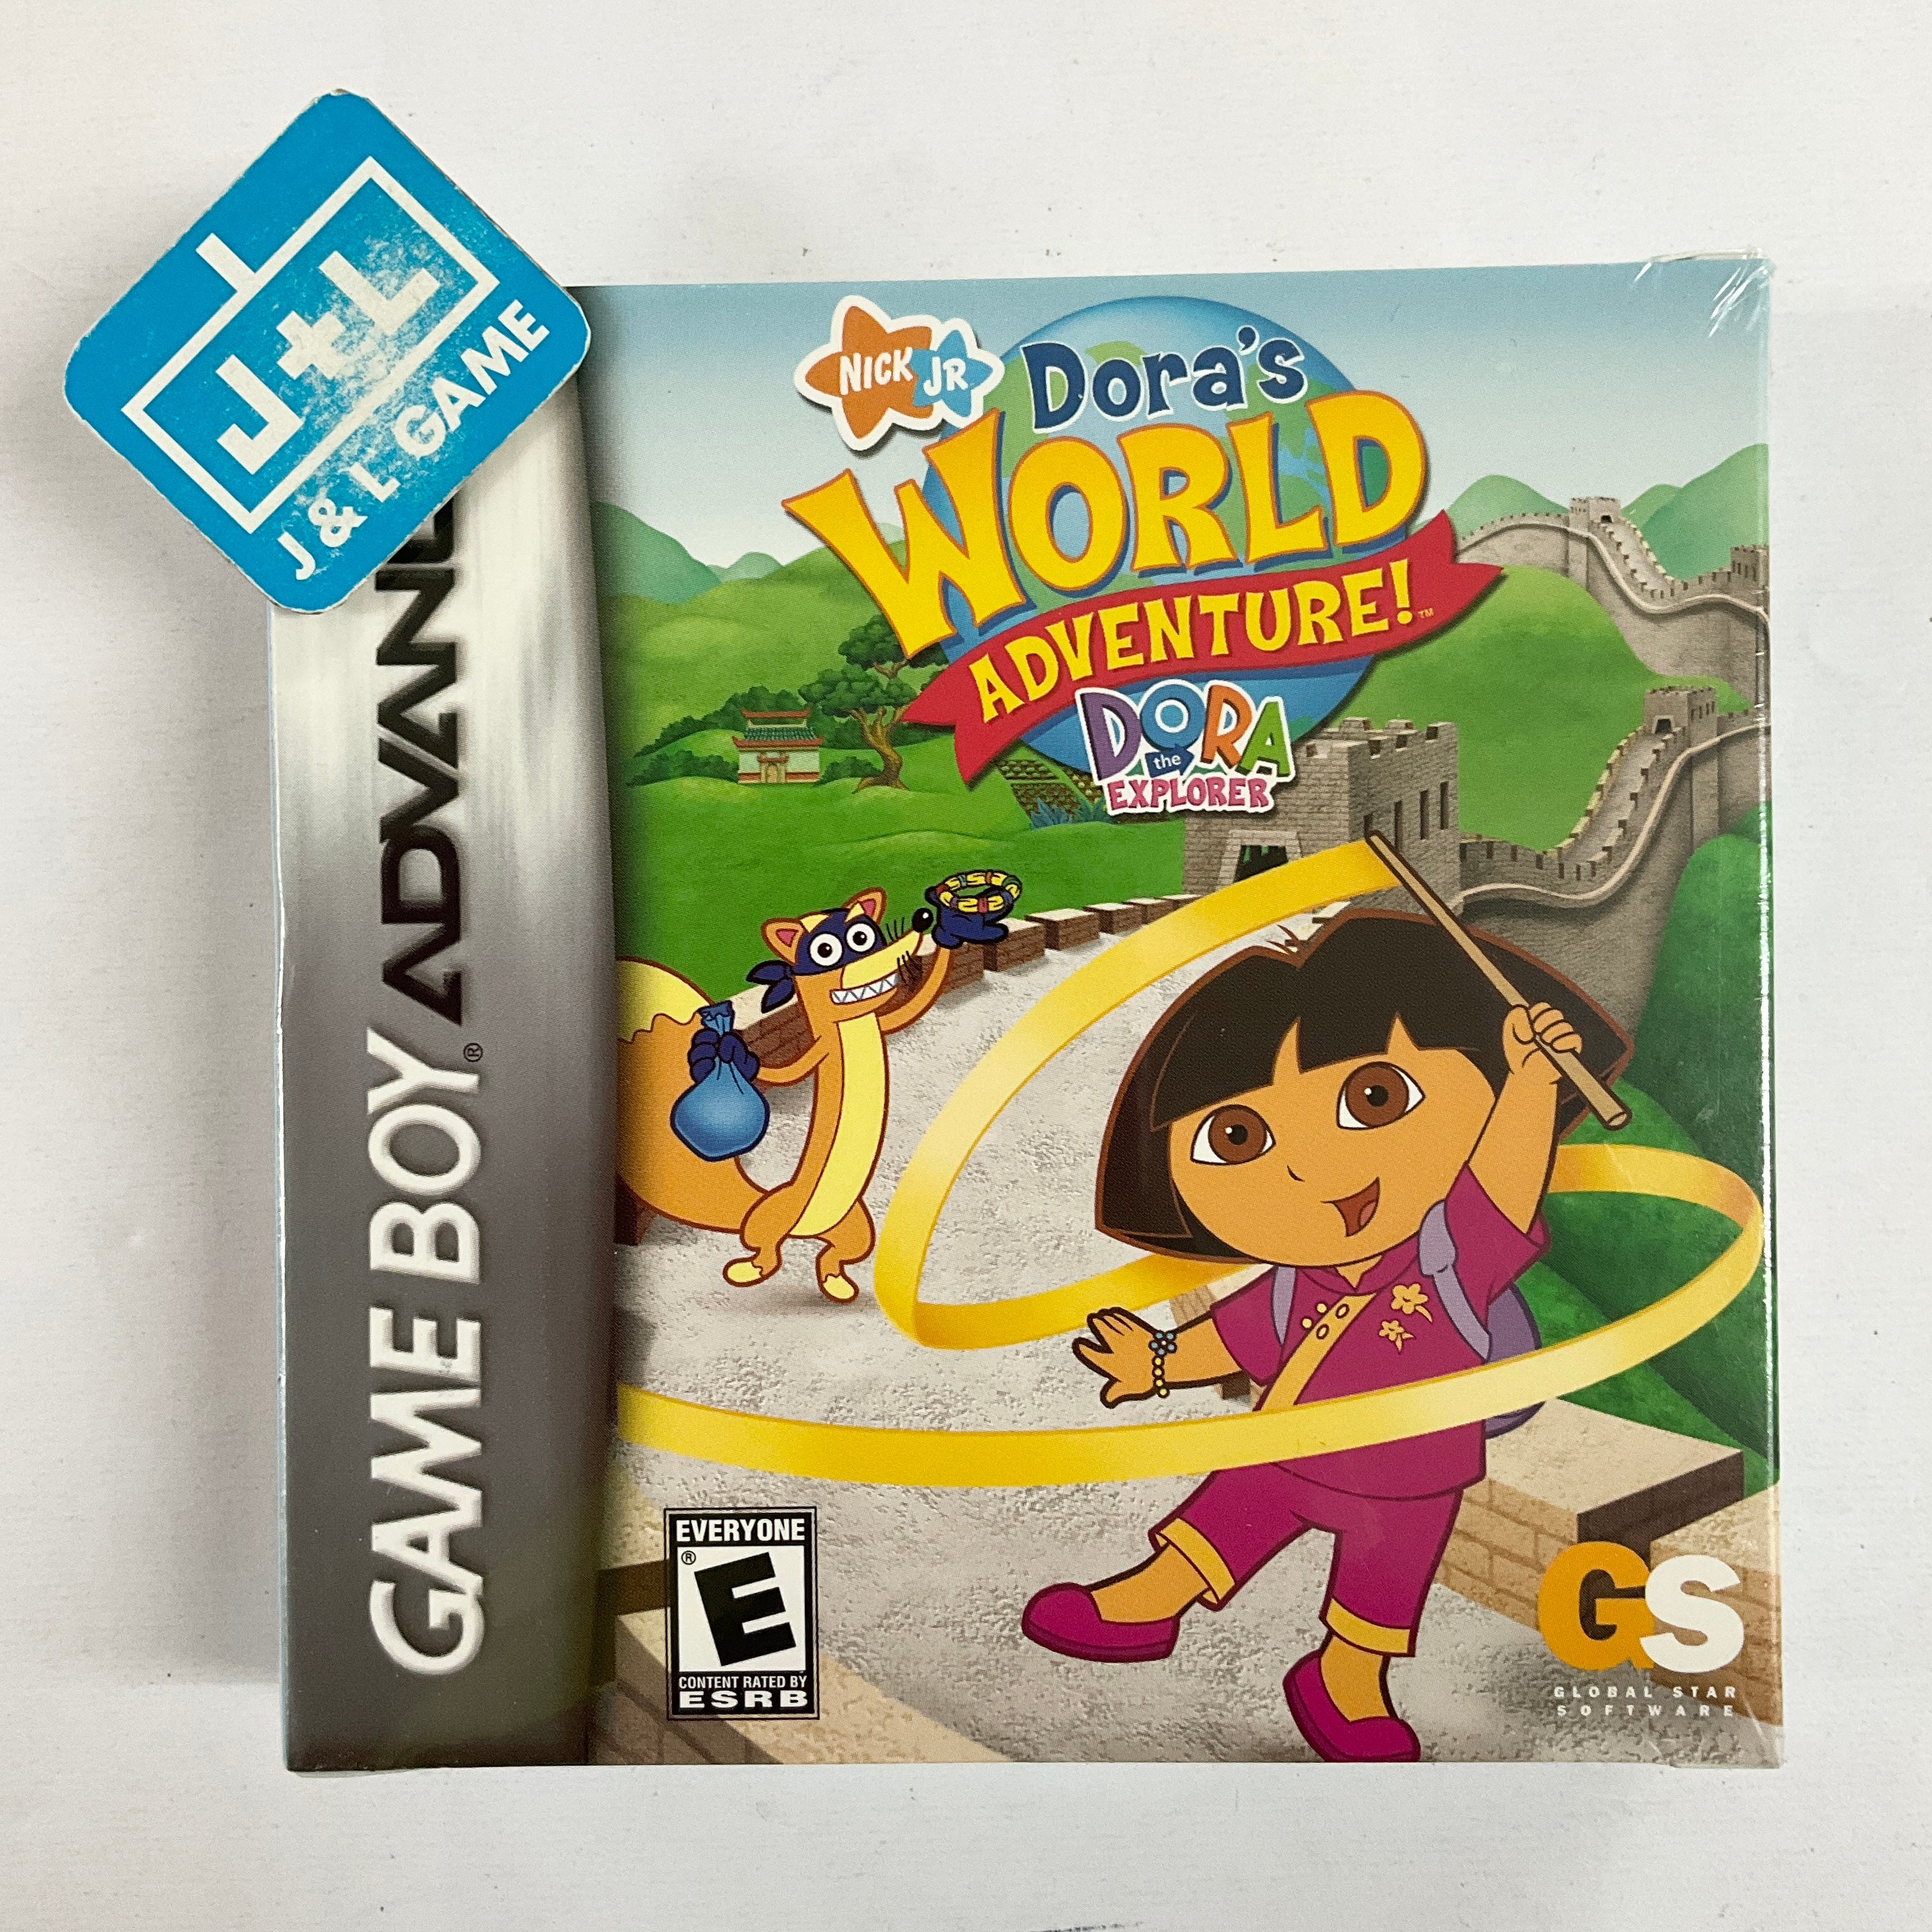 Dora the Explorer: Dora's World Adventure - (GBA) Game Boy Advance Video Games Global Star Software   